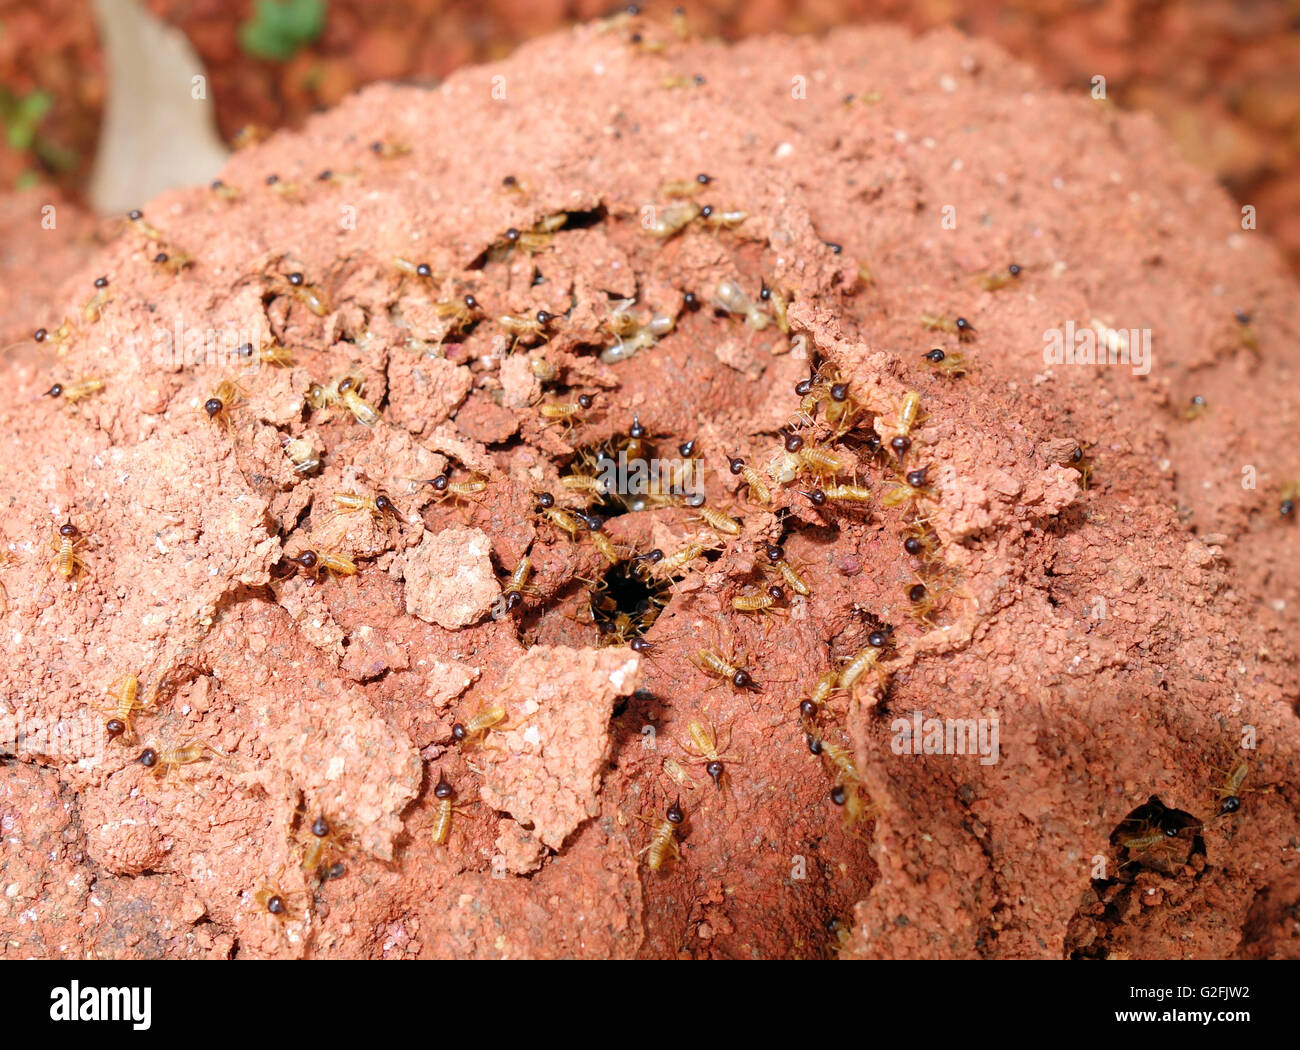 Termites beginning repairs to damage to external mound wall, Cape York Peninsula, Queensland, Australia Stock Photo